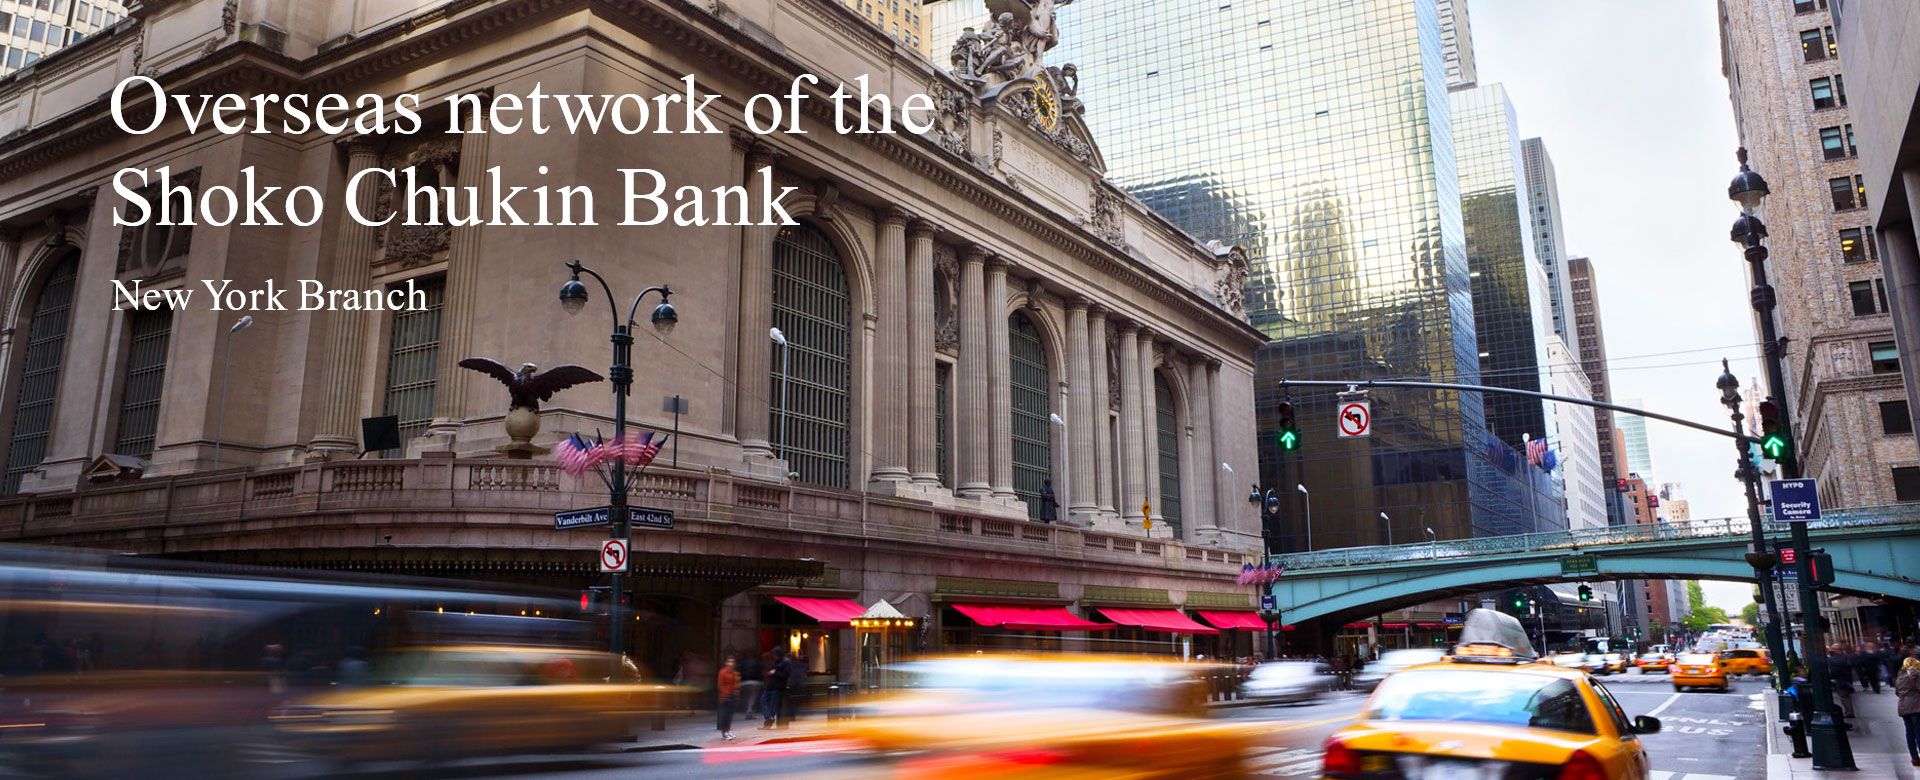 Overseas network of the Shoko Chukin Bank New York Branch